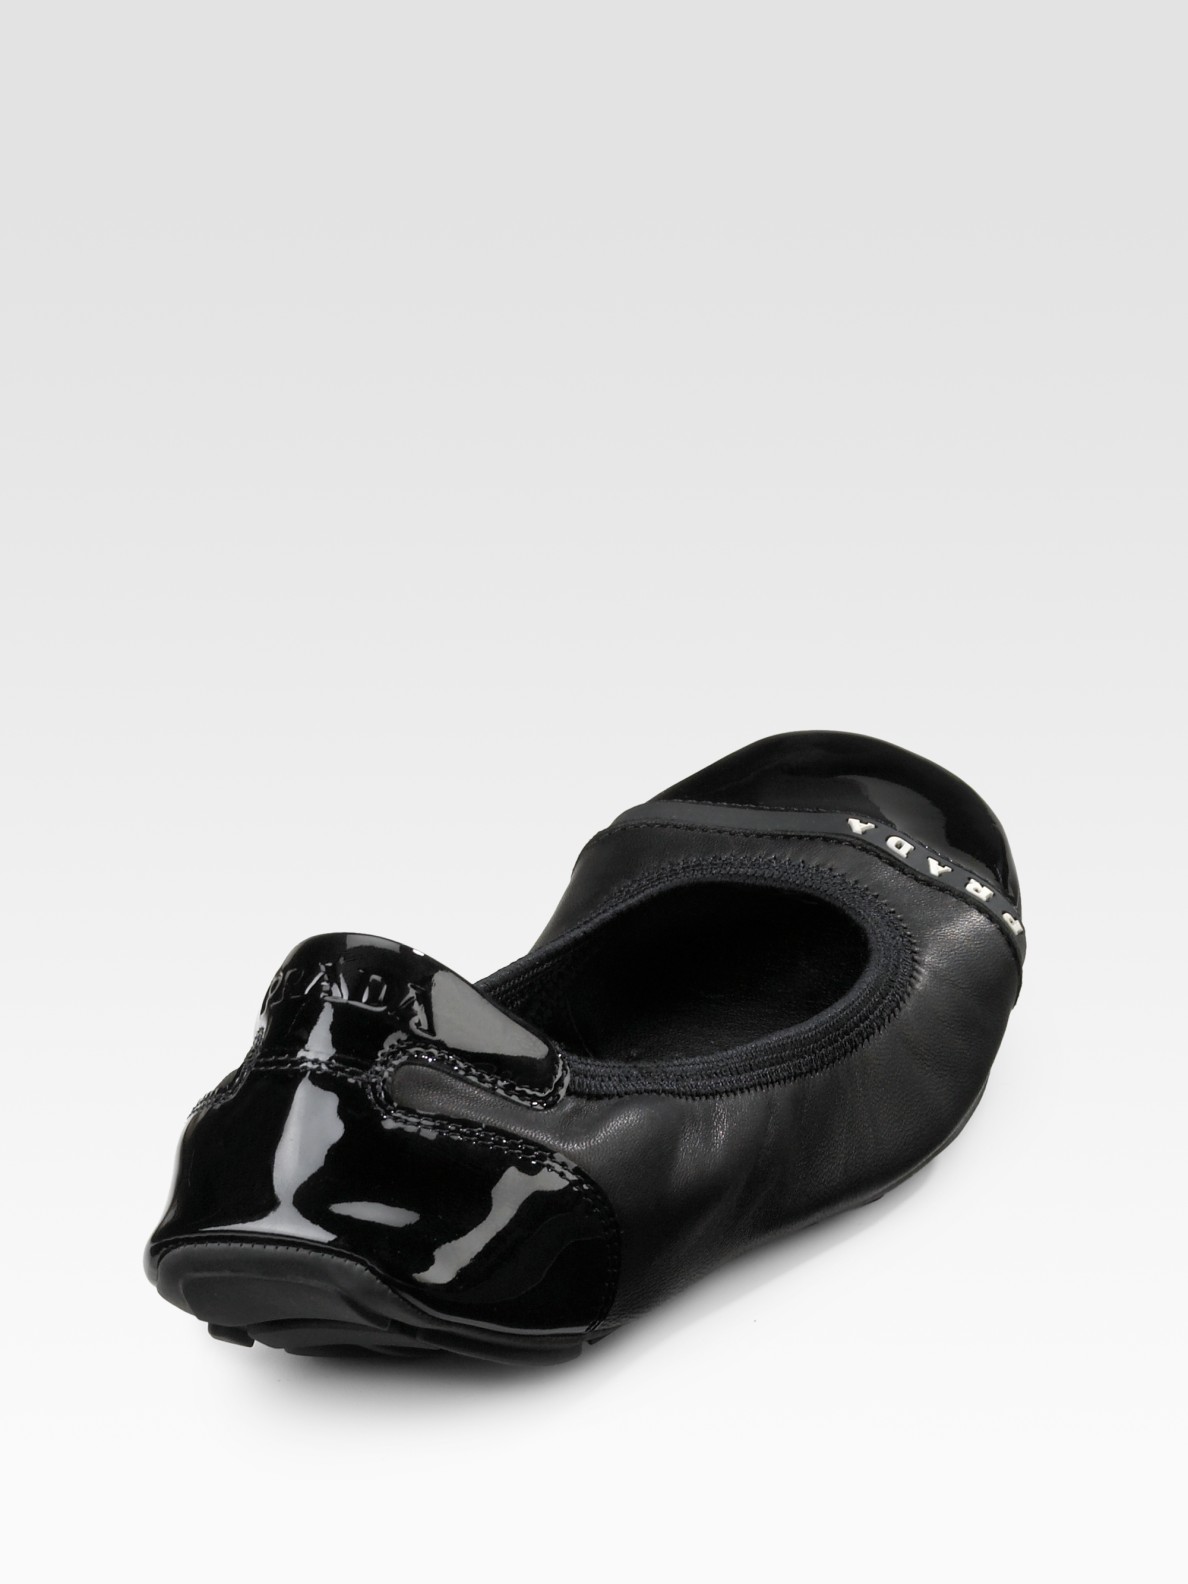 Prada Scrunch Ballet Flats in Black | Lyst